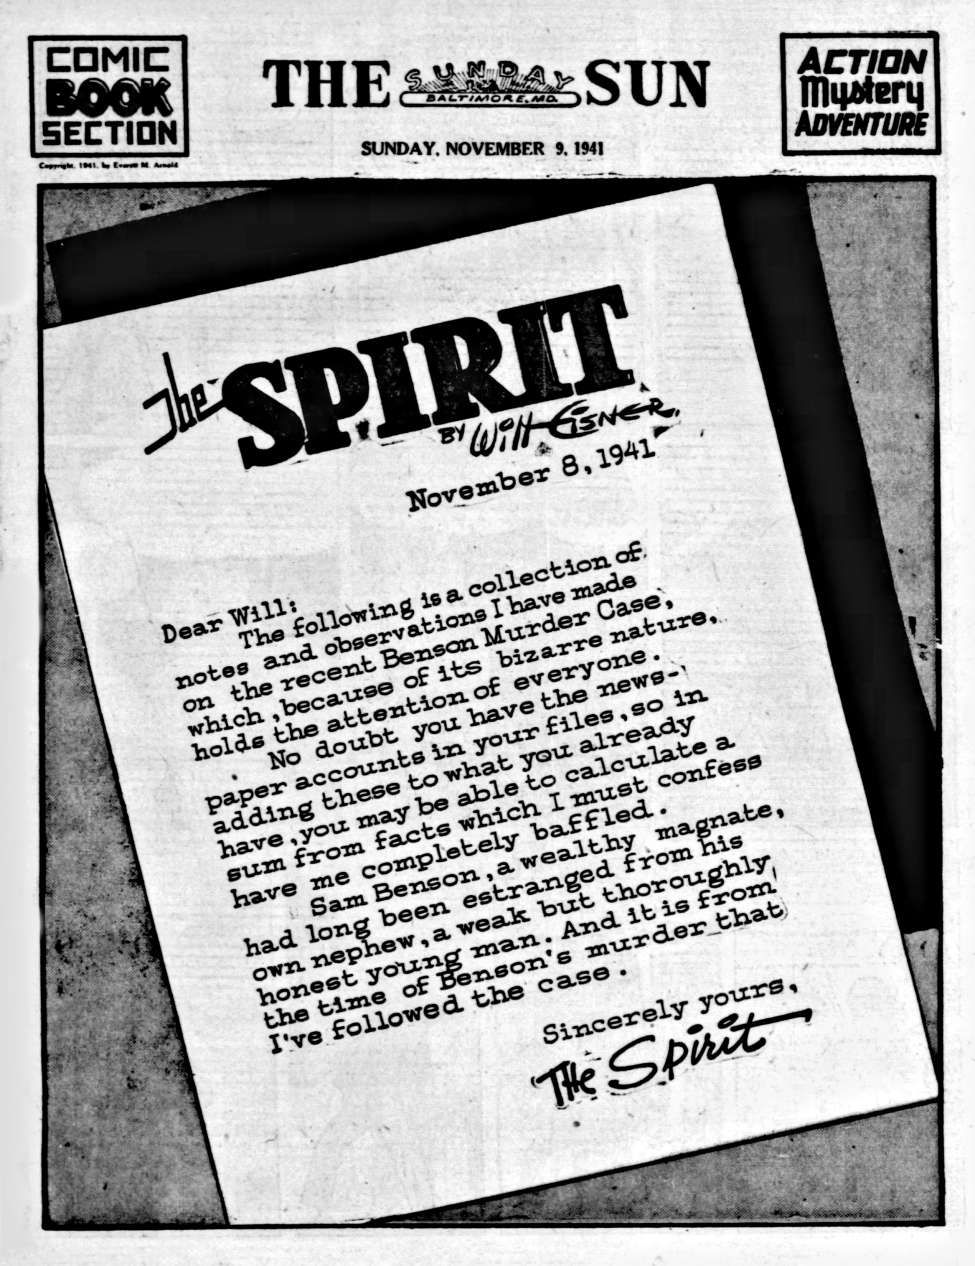 Book Cover For The Spirit (1941-11-09) - Baltimore Sun (b/w)